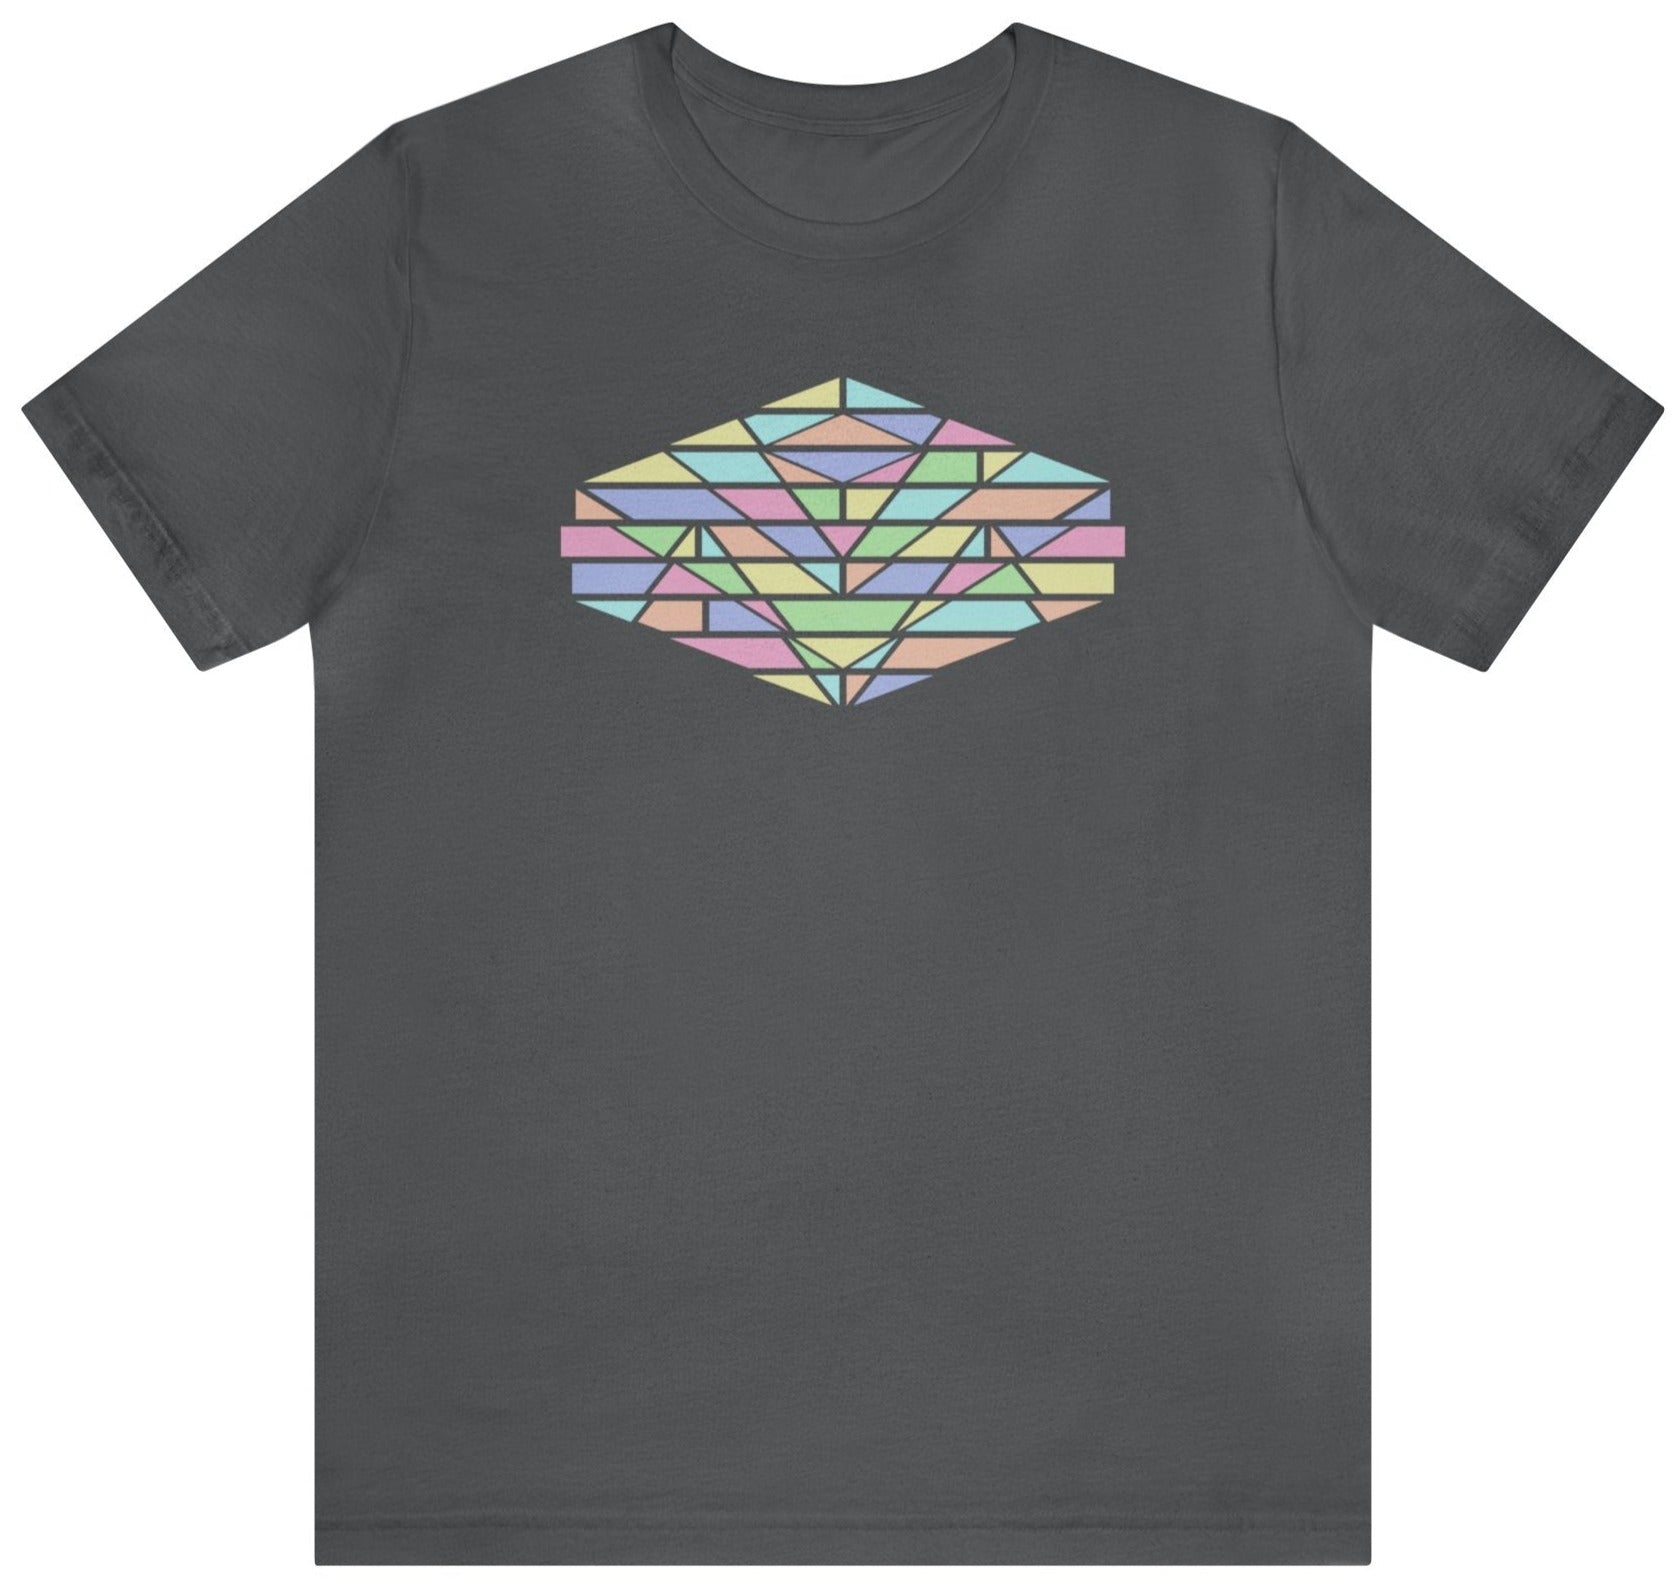 Colorful design t-shirt